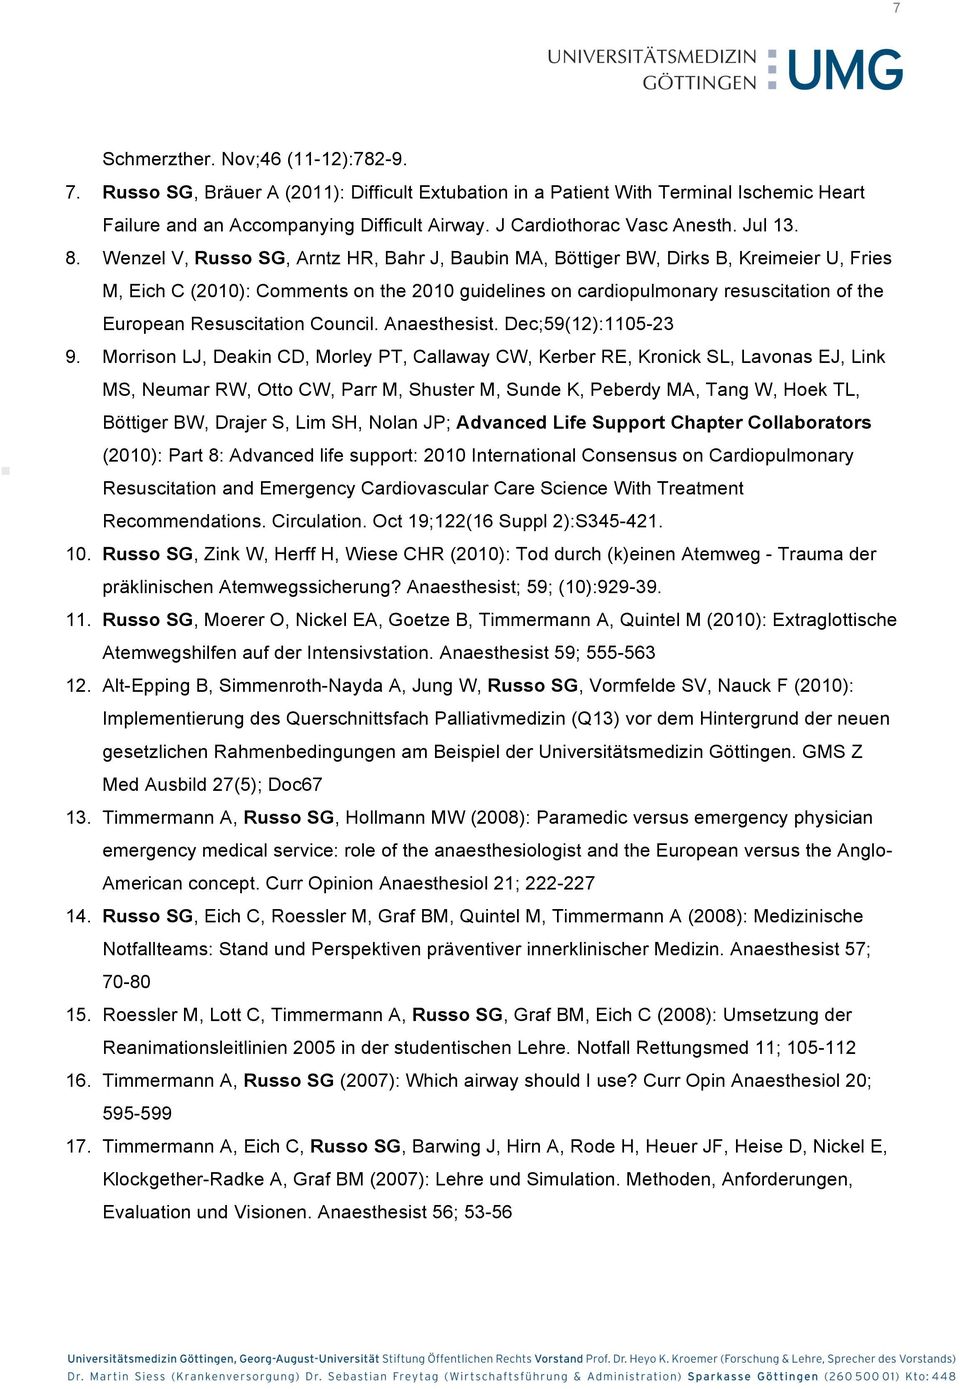 Wenzel V, Russo SG, Arntz HR, Bahr J, Baubin MA, Böttiger BW, Dirks B, Kreimeier U, Fries M, Eich C (2010): Comments on the 2010 guidelines on cardiopulmonary resuscitation of the European